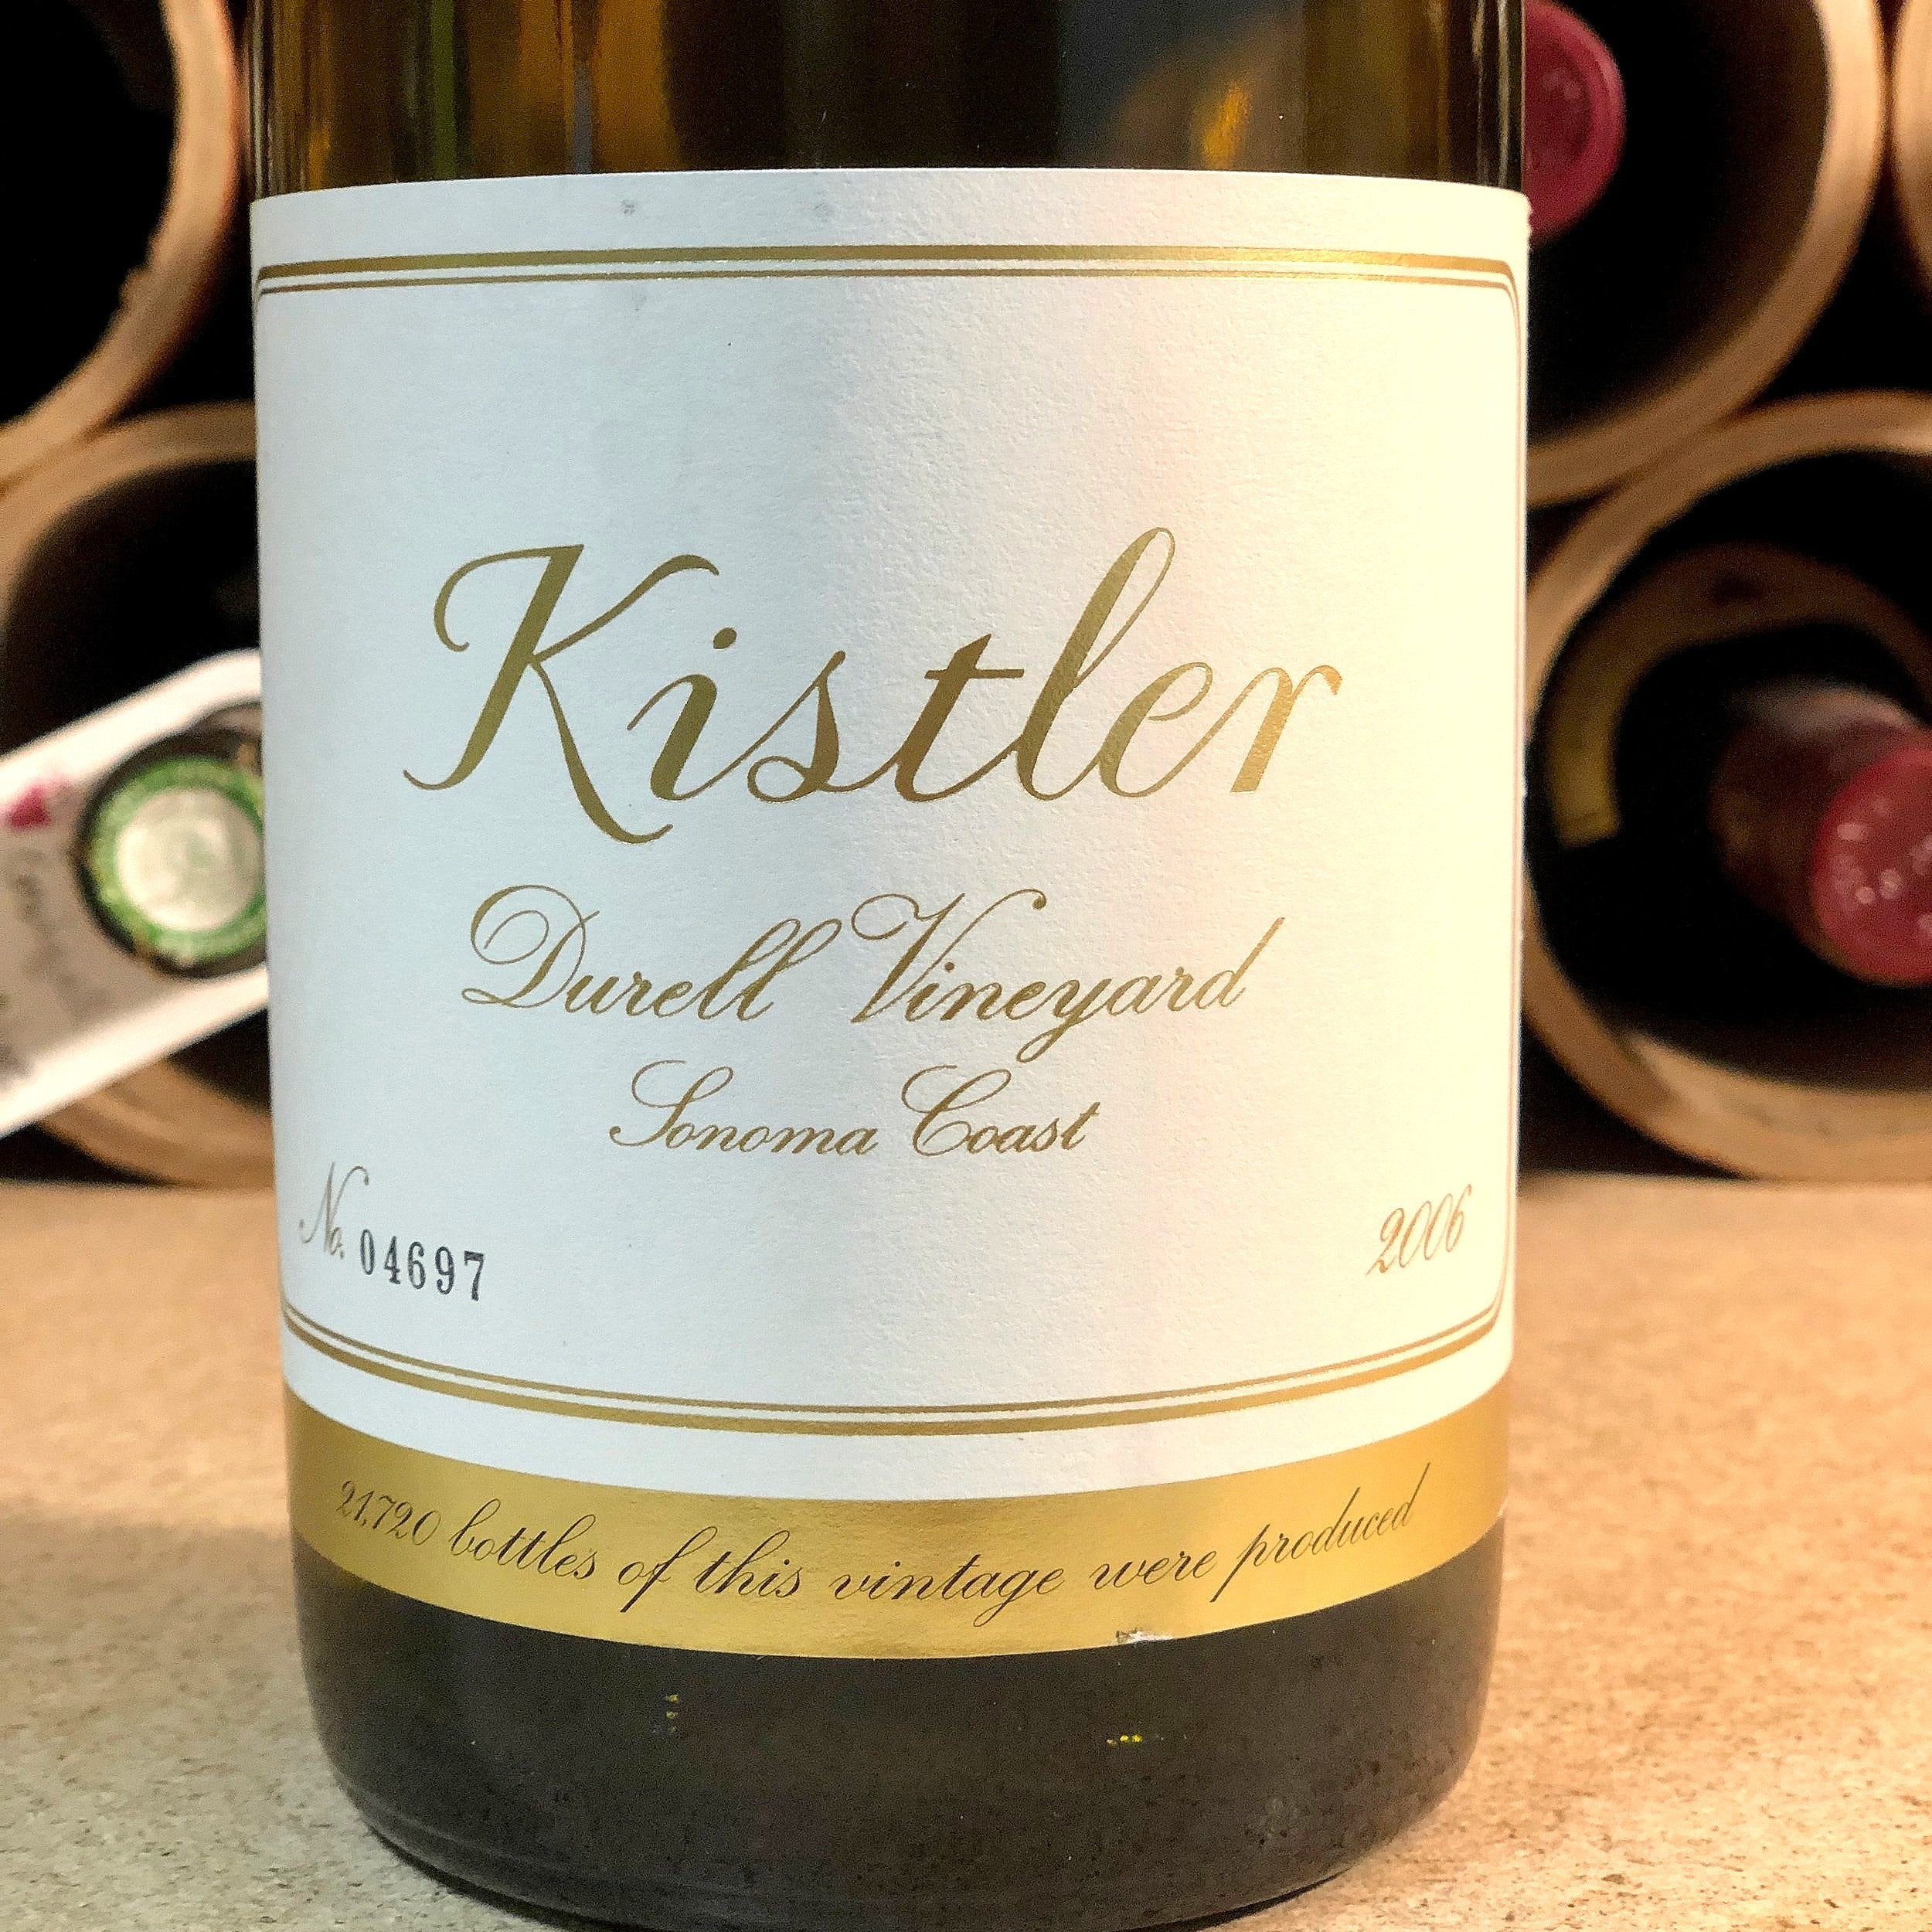 Kistler, Sonoma Coast, Durell Vineyard, Chardonnay 2006